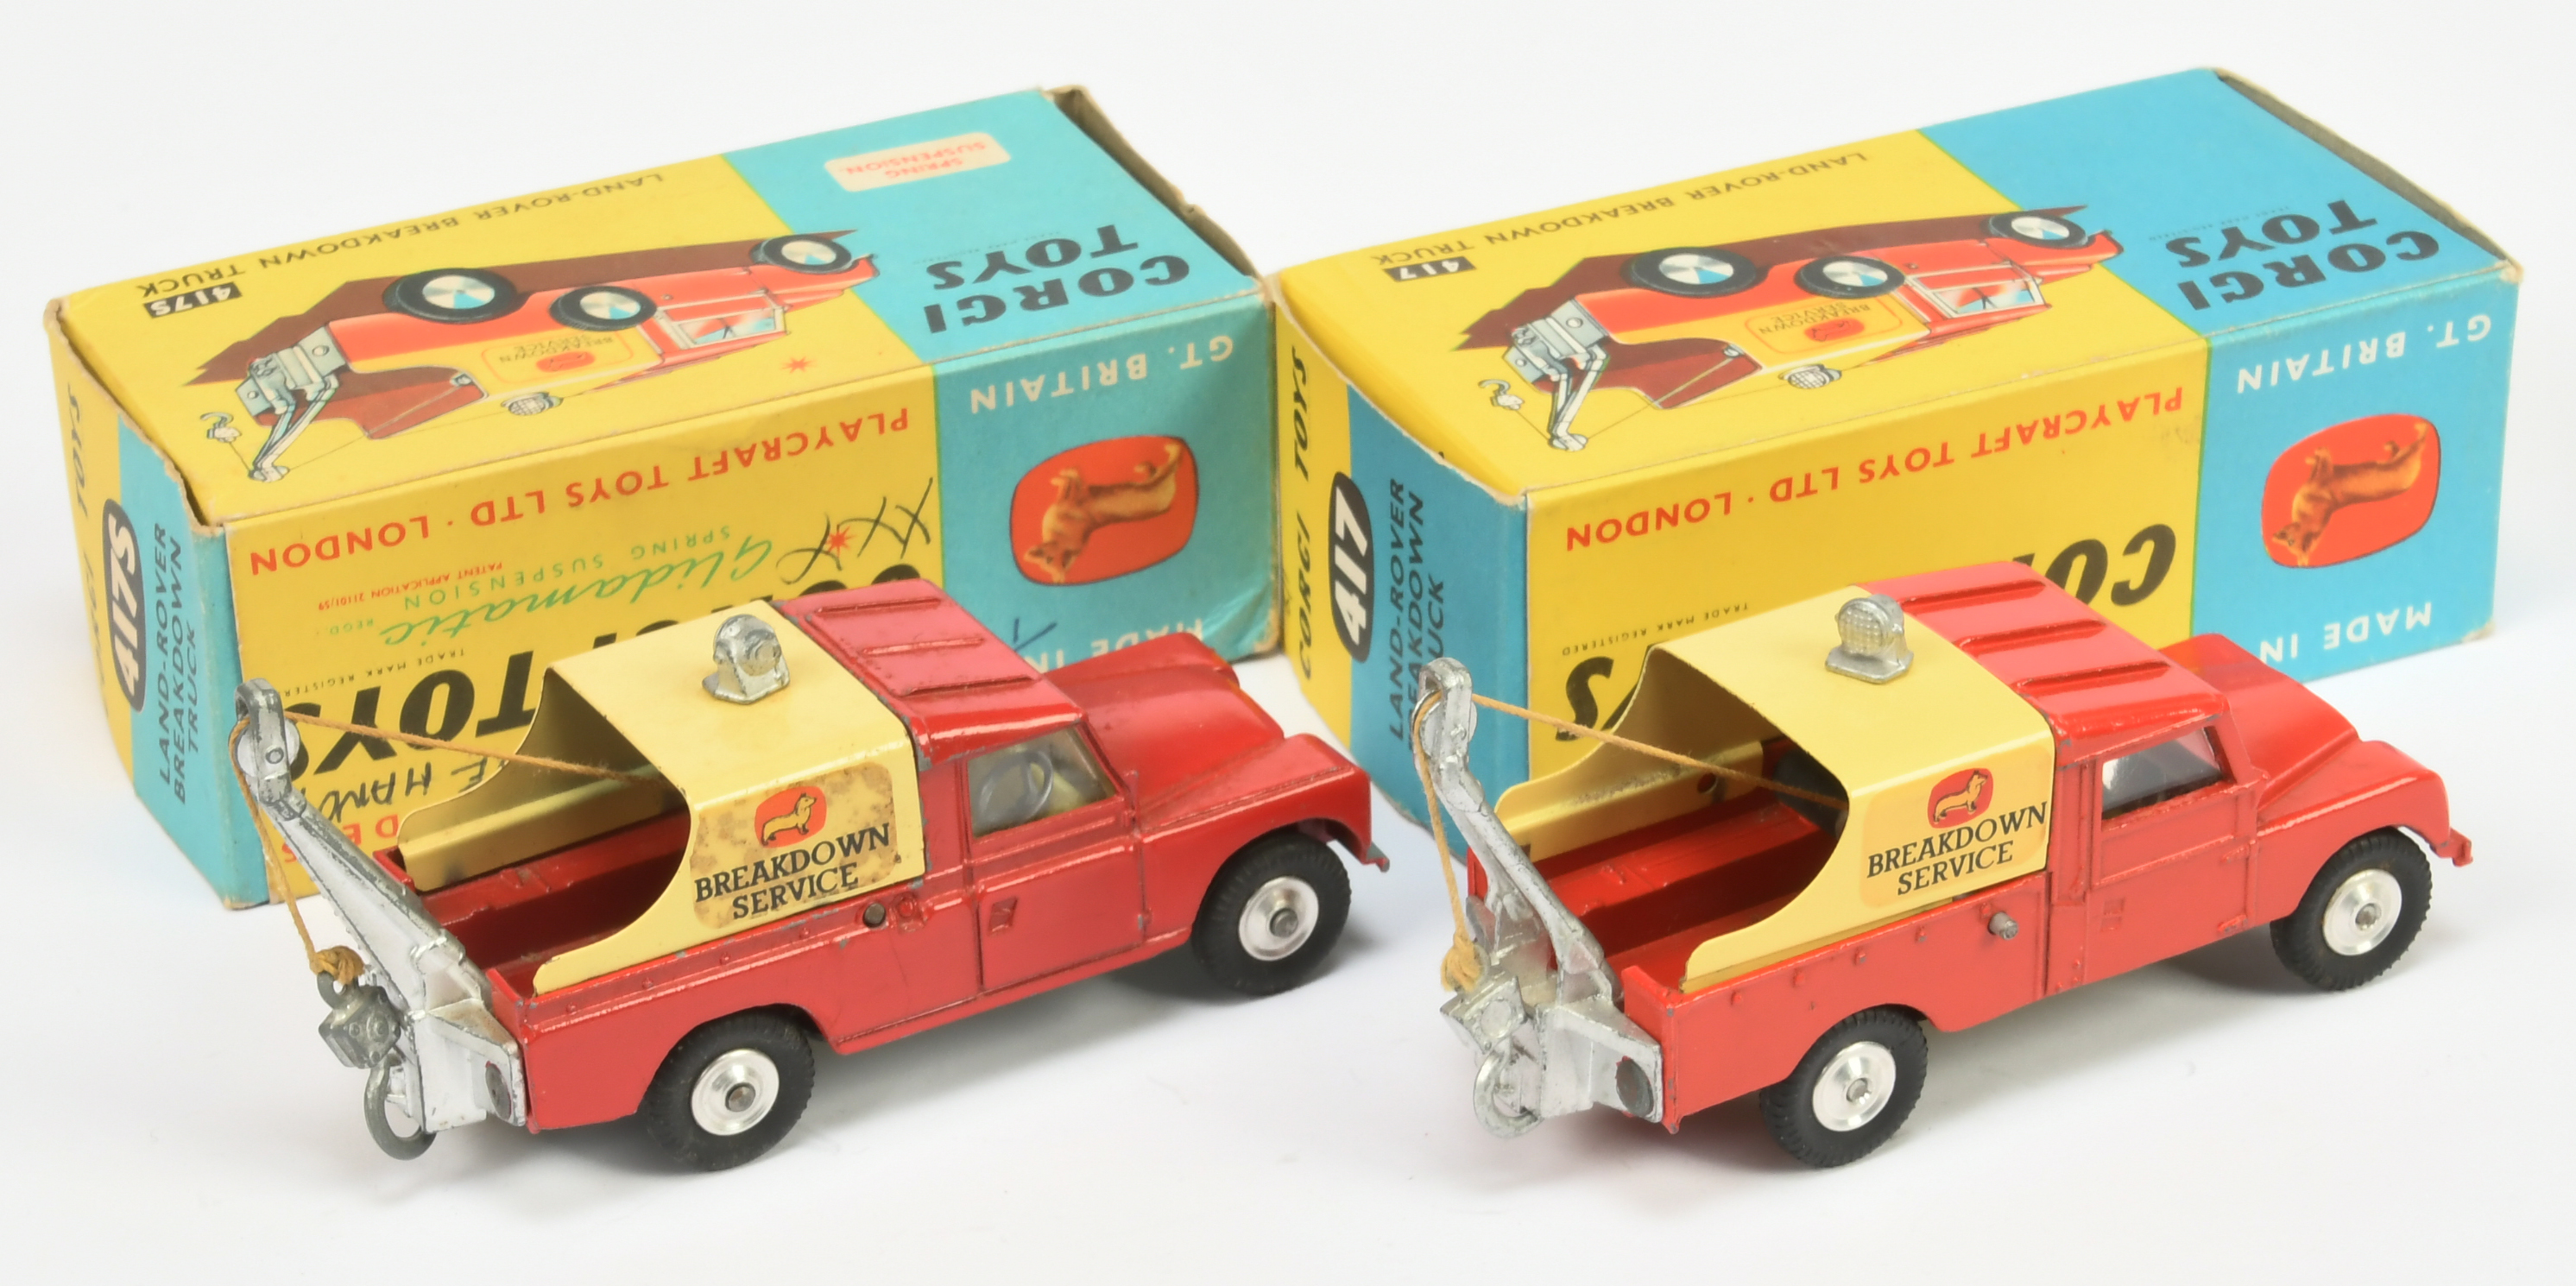 Corgi Toys 417 Land Rover Breakdown Truck "Breakdown Service" - Red body, yellow metal tilt, silv... - Image 2 of 2